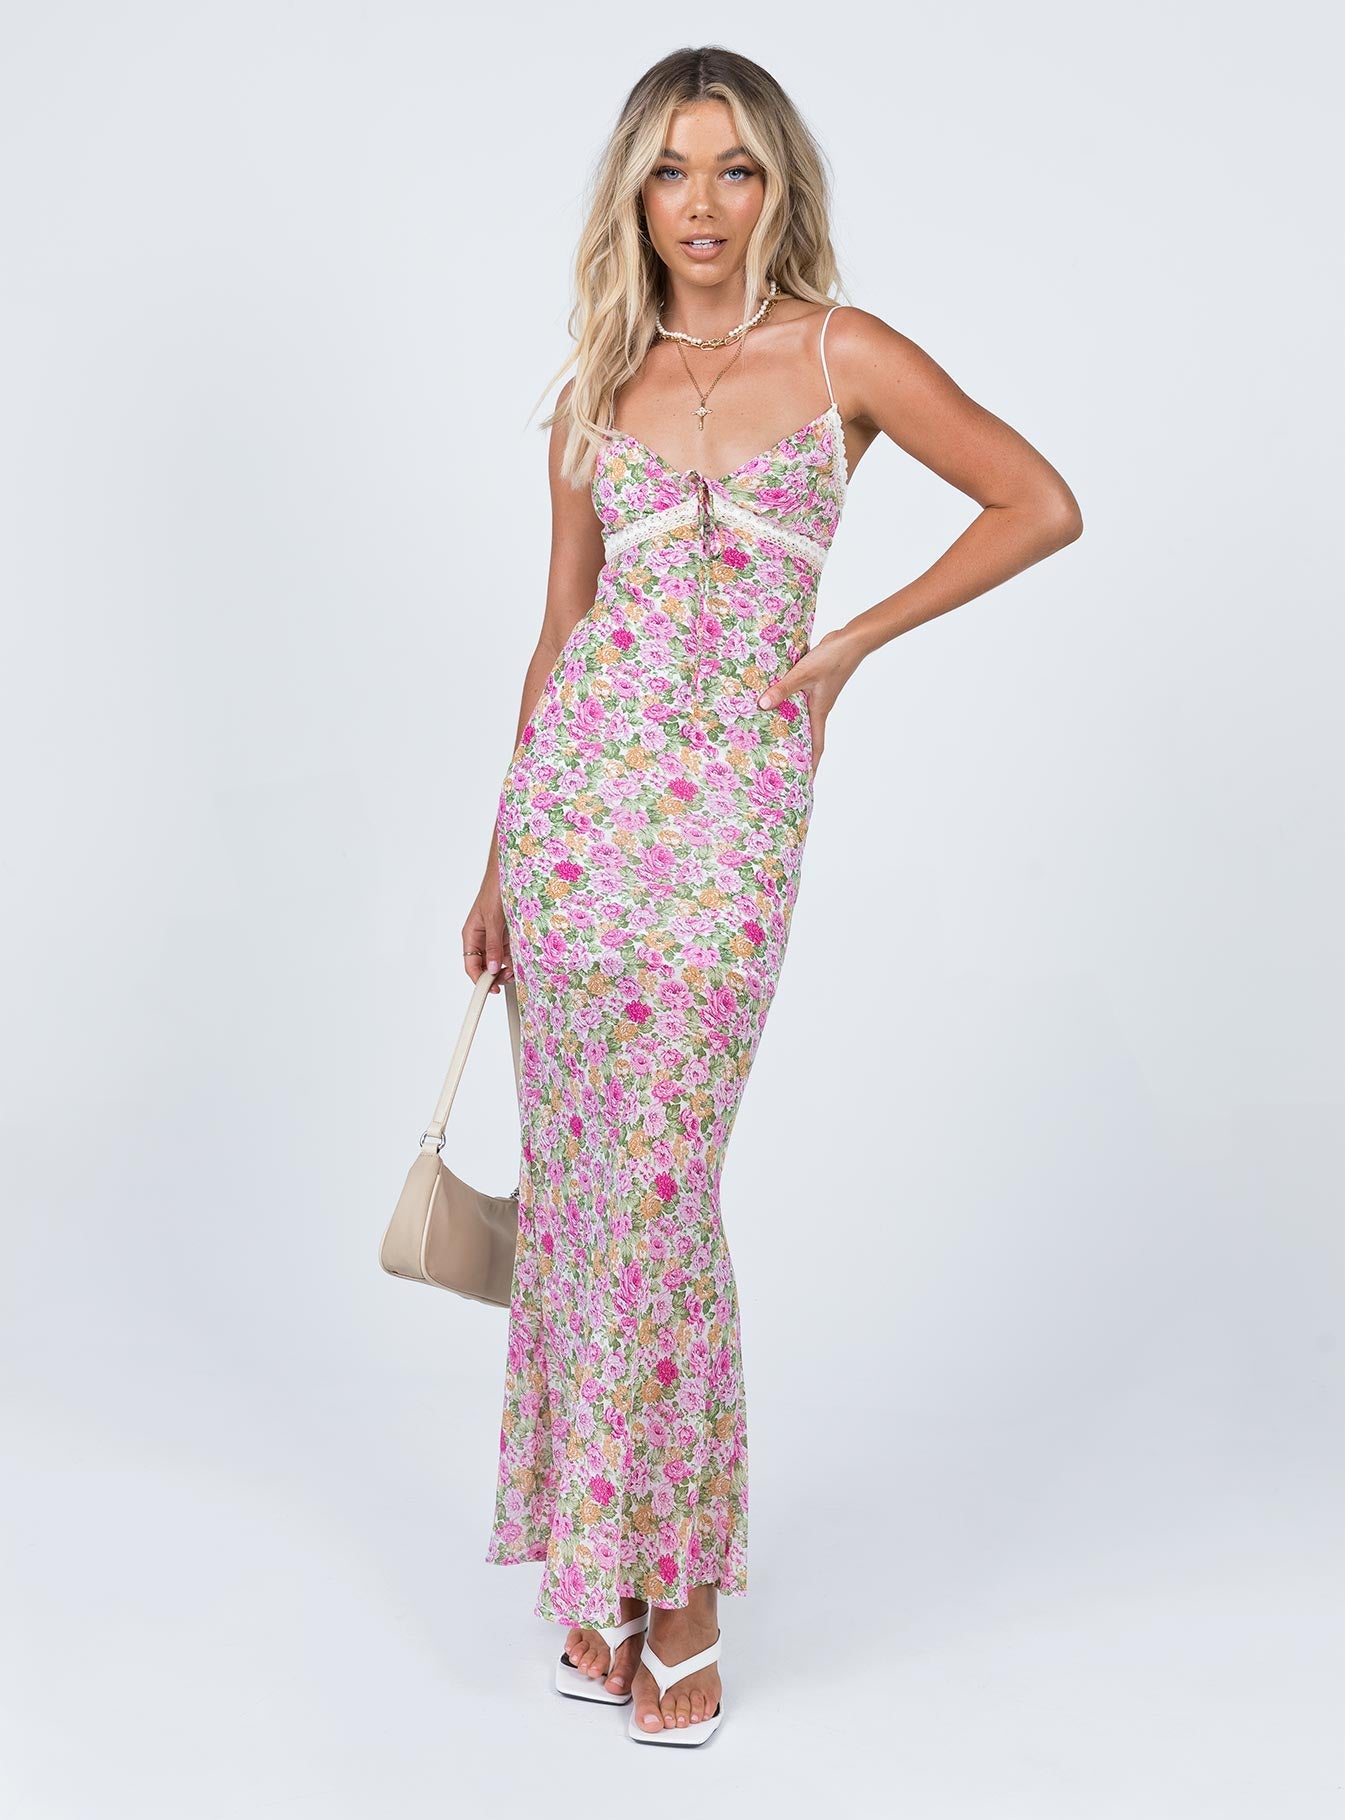 Shop Formal Dress - Emily Maxi Dress Pink Floral sixth image